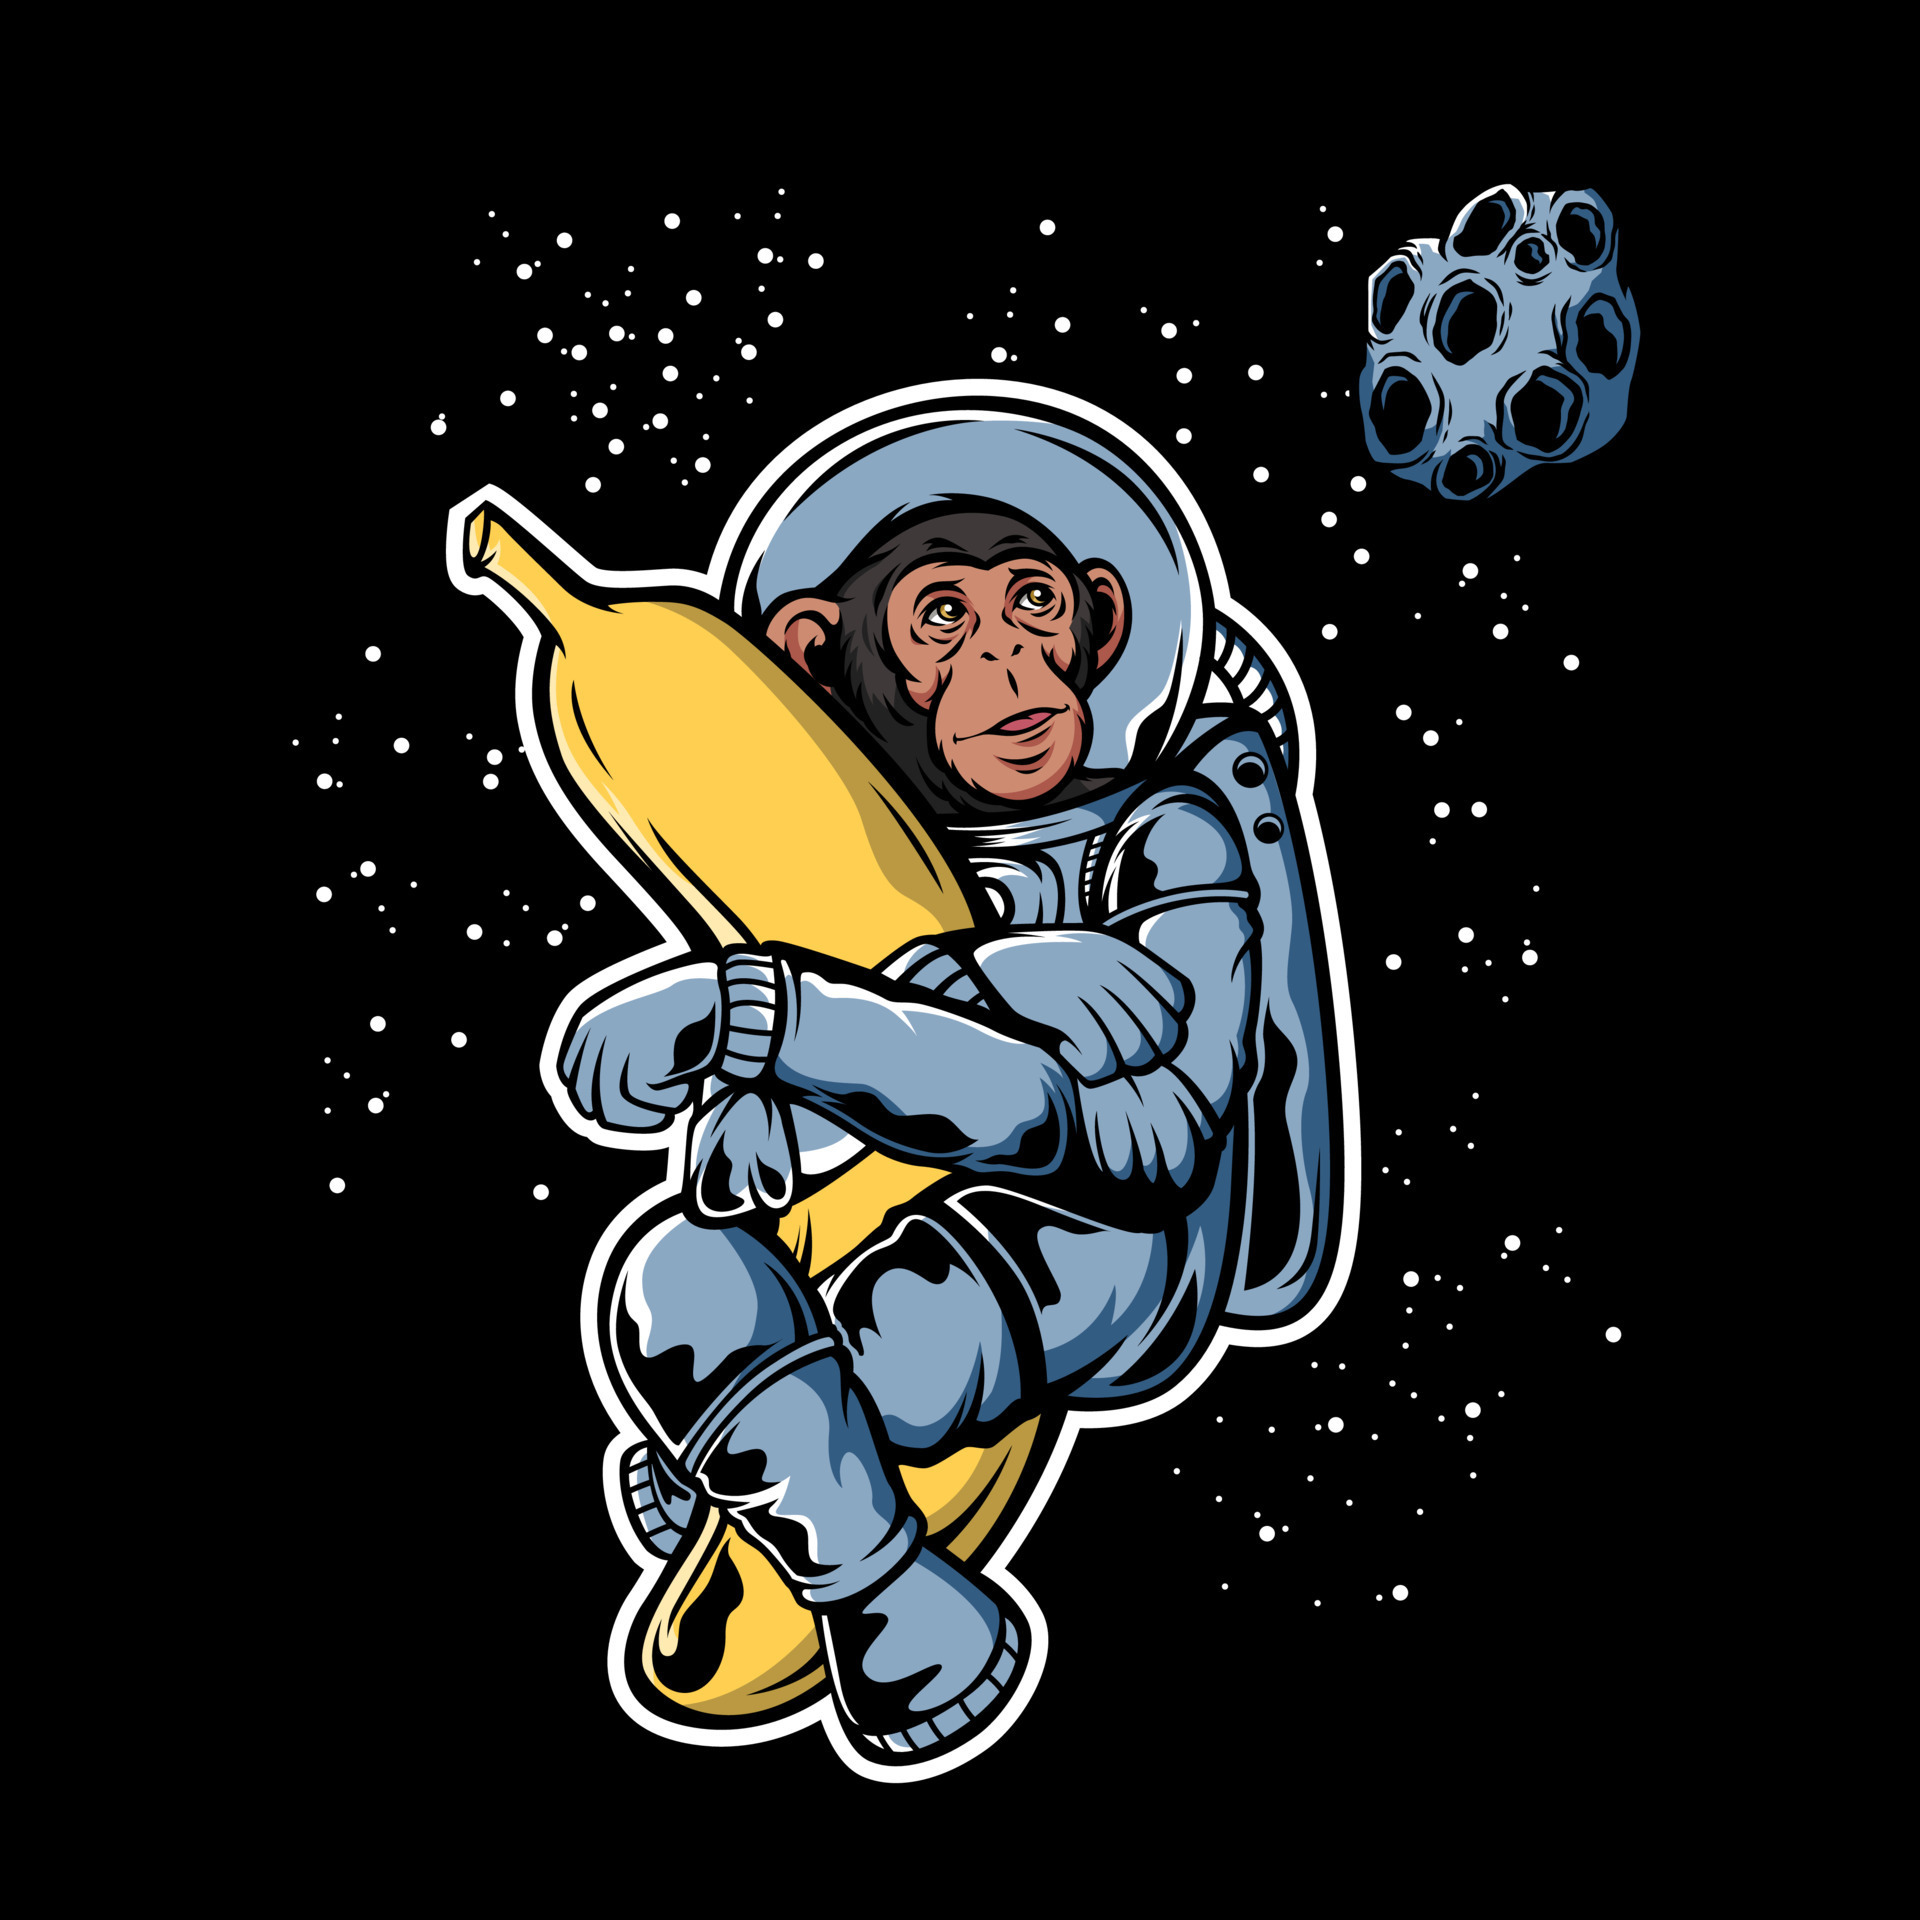 mono astronauta ilustración 21942202 Vector en Vecteezy